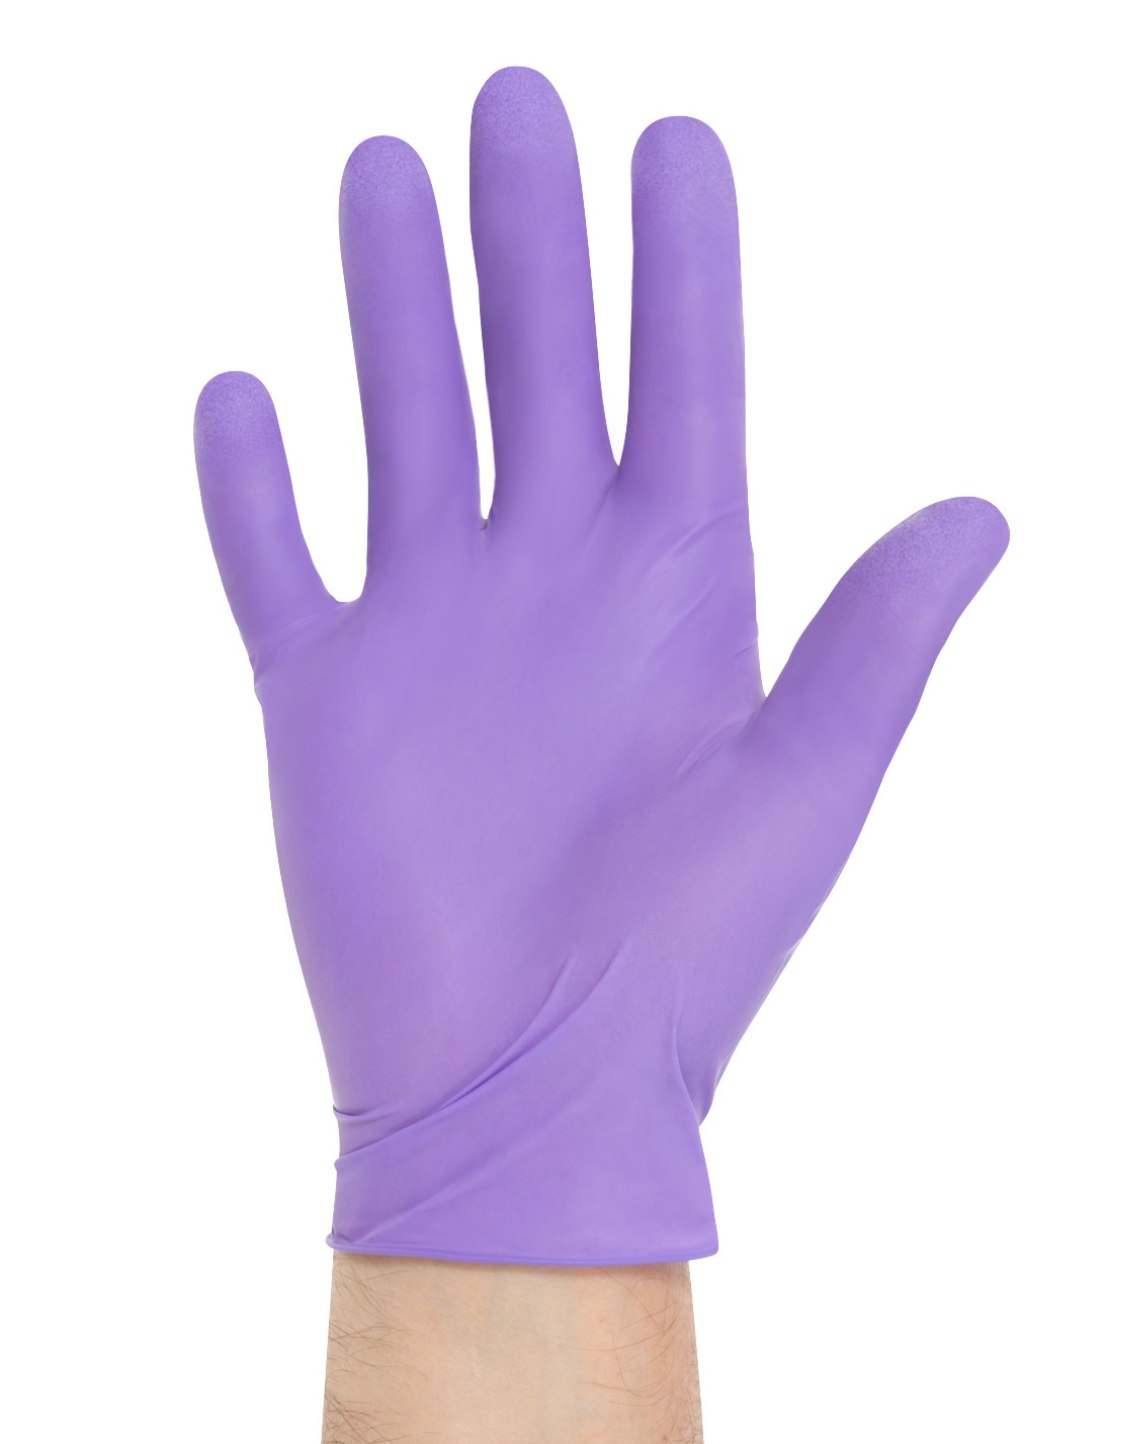 PURPLE Nitrile Gloves, Medium, Case of 1000